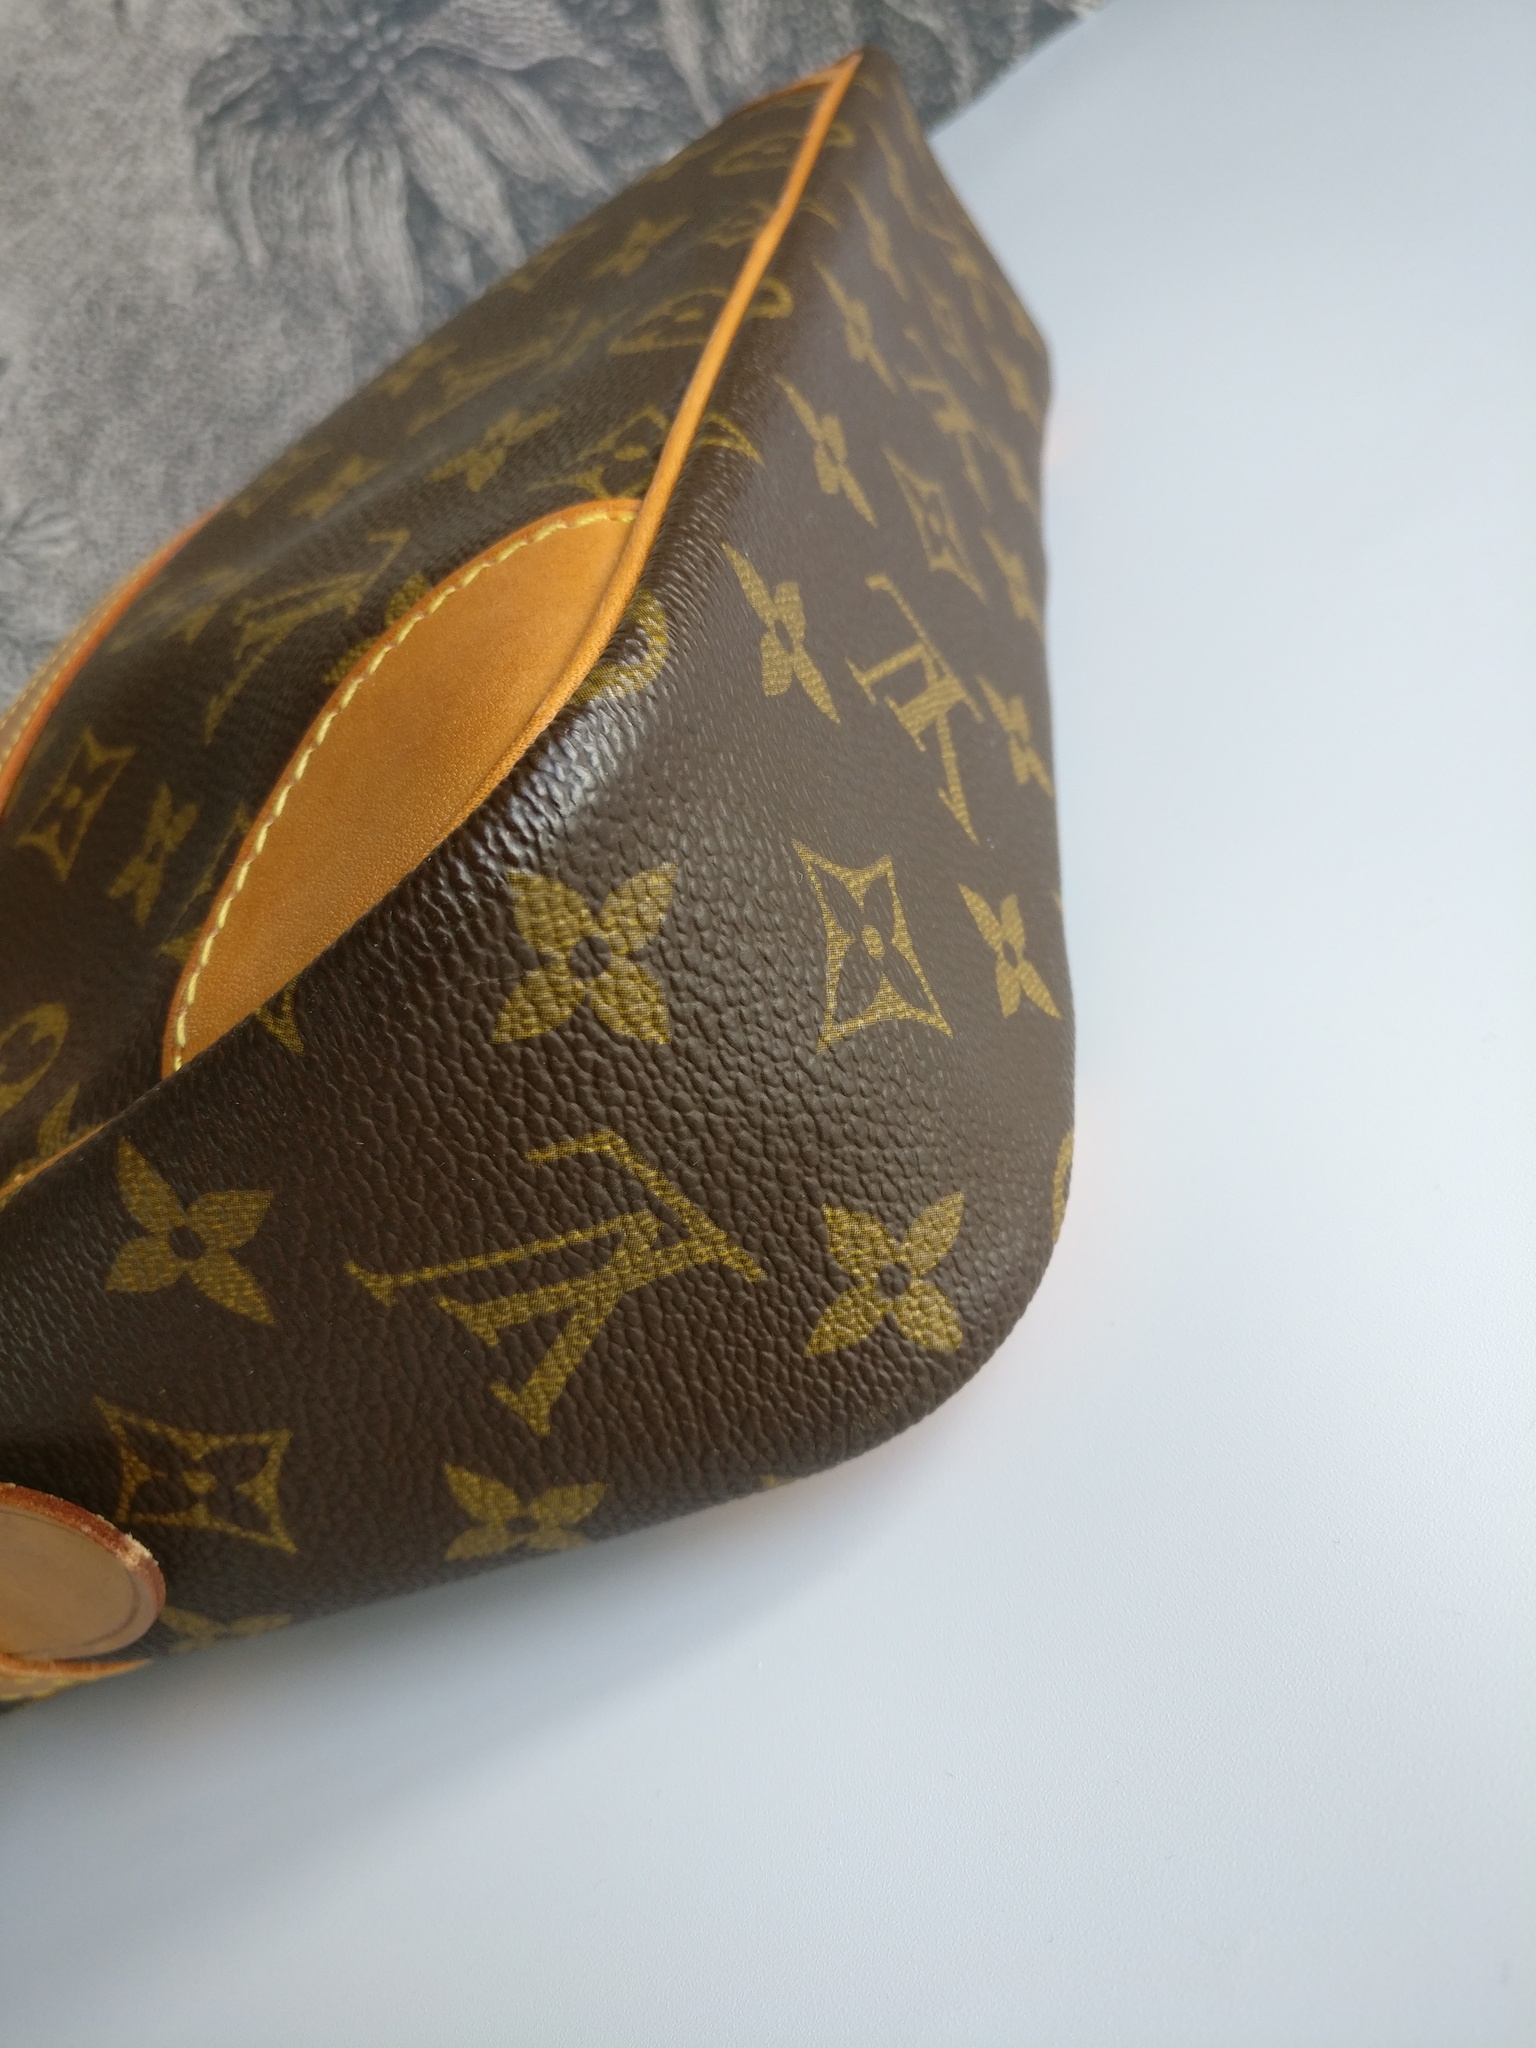 Louis Vuitton Compiegne 28 Tan - $550 - From Fancy